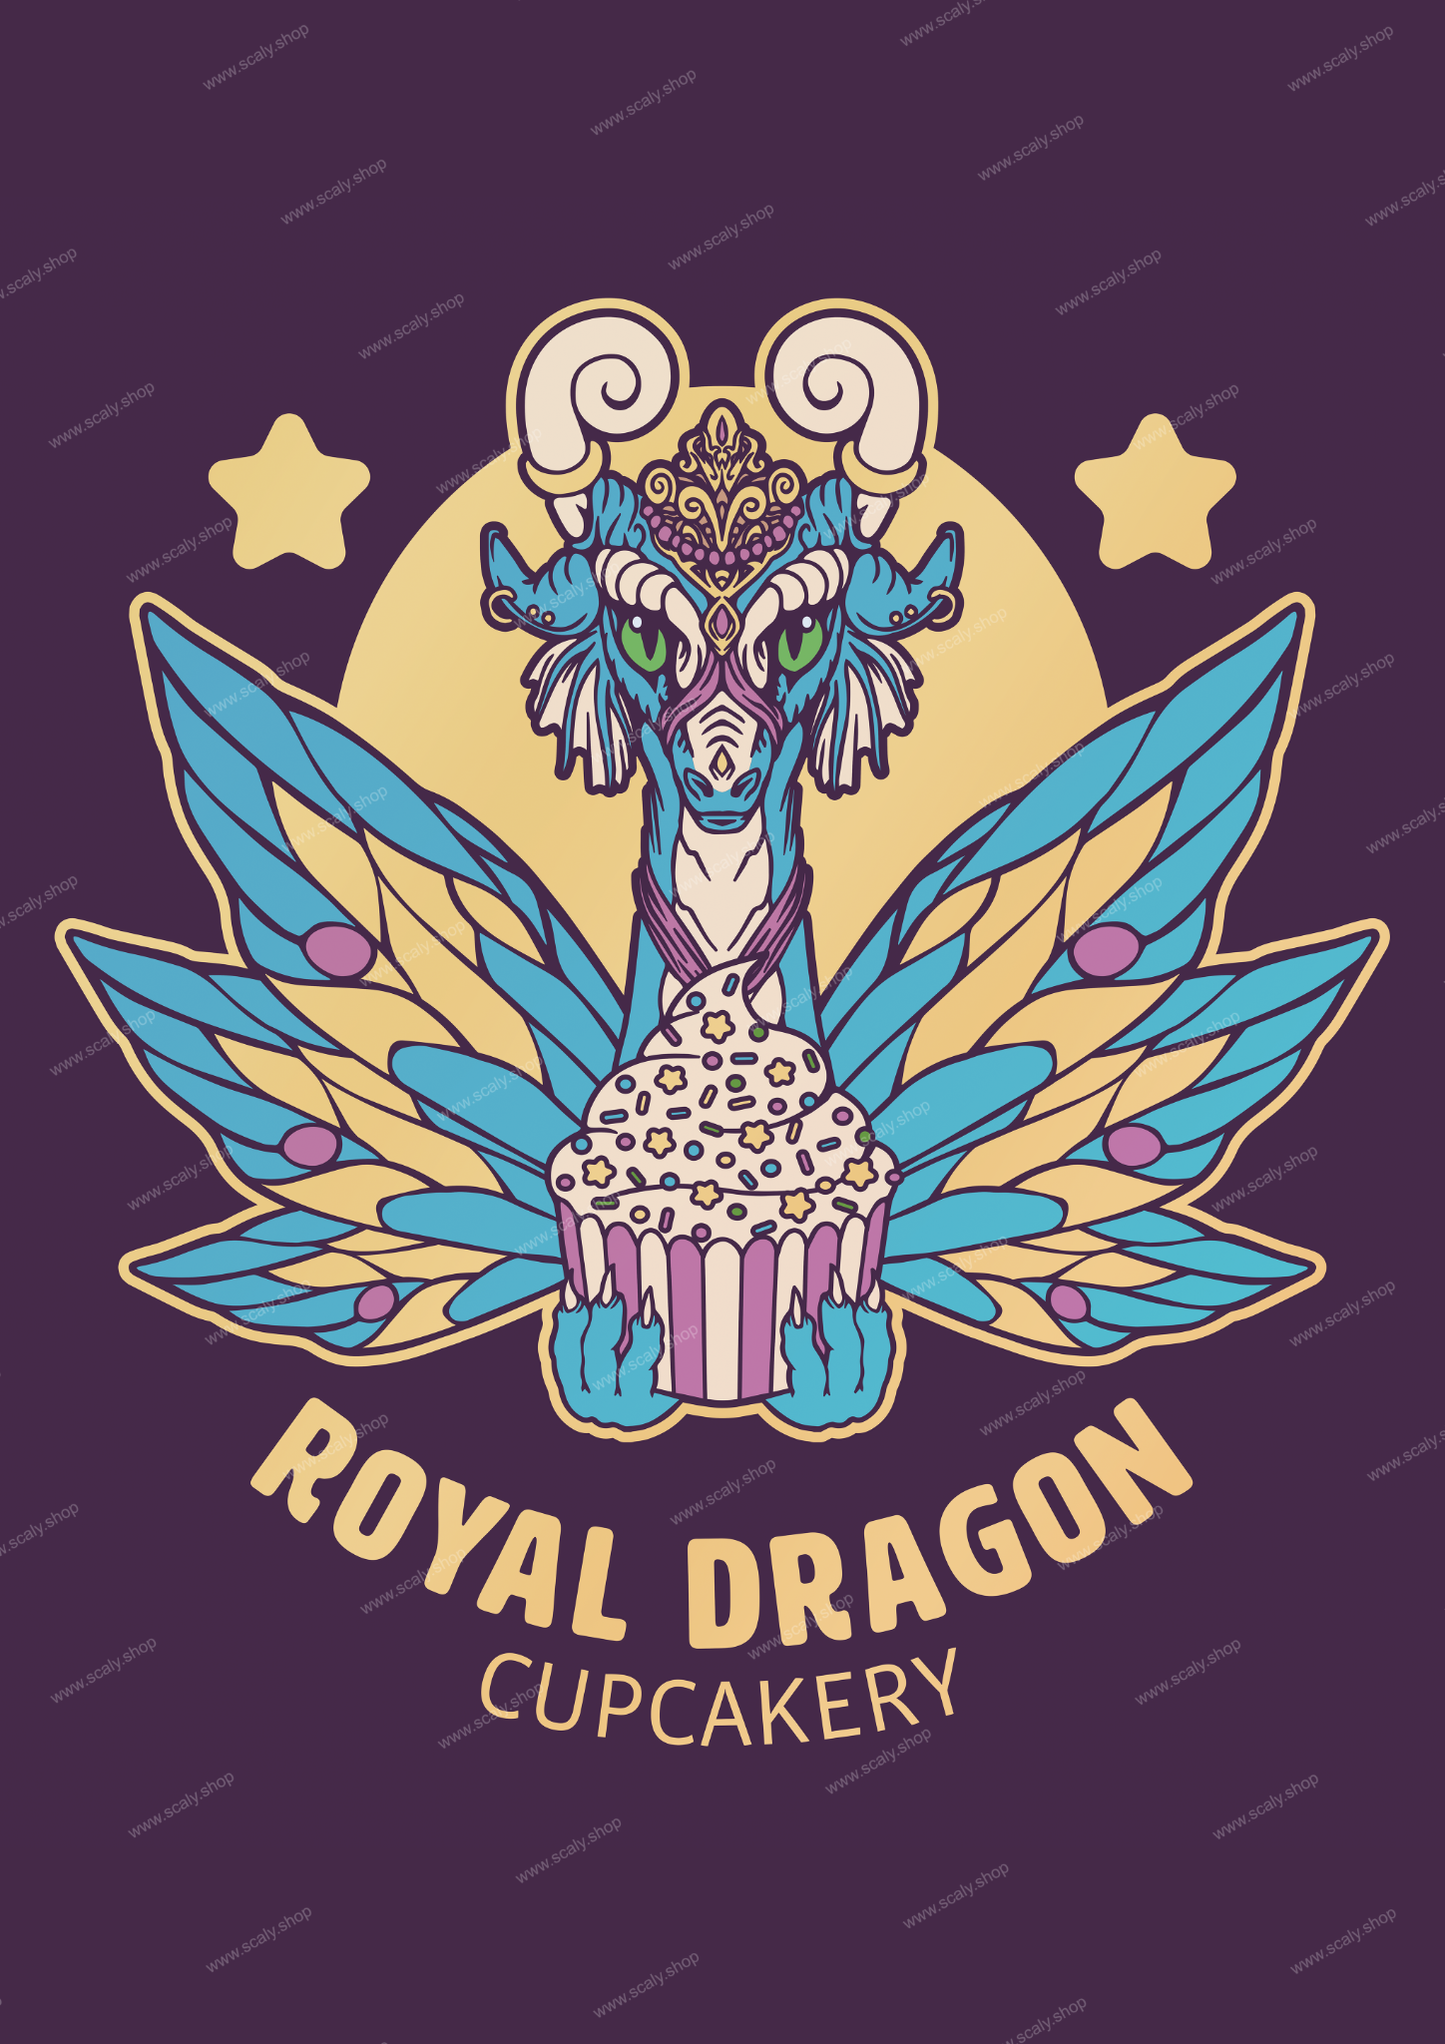 Royal Dragon Cupcakery A3 Print